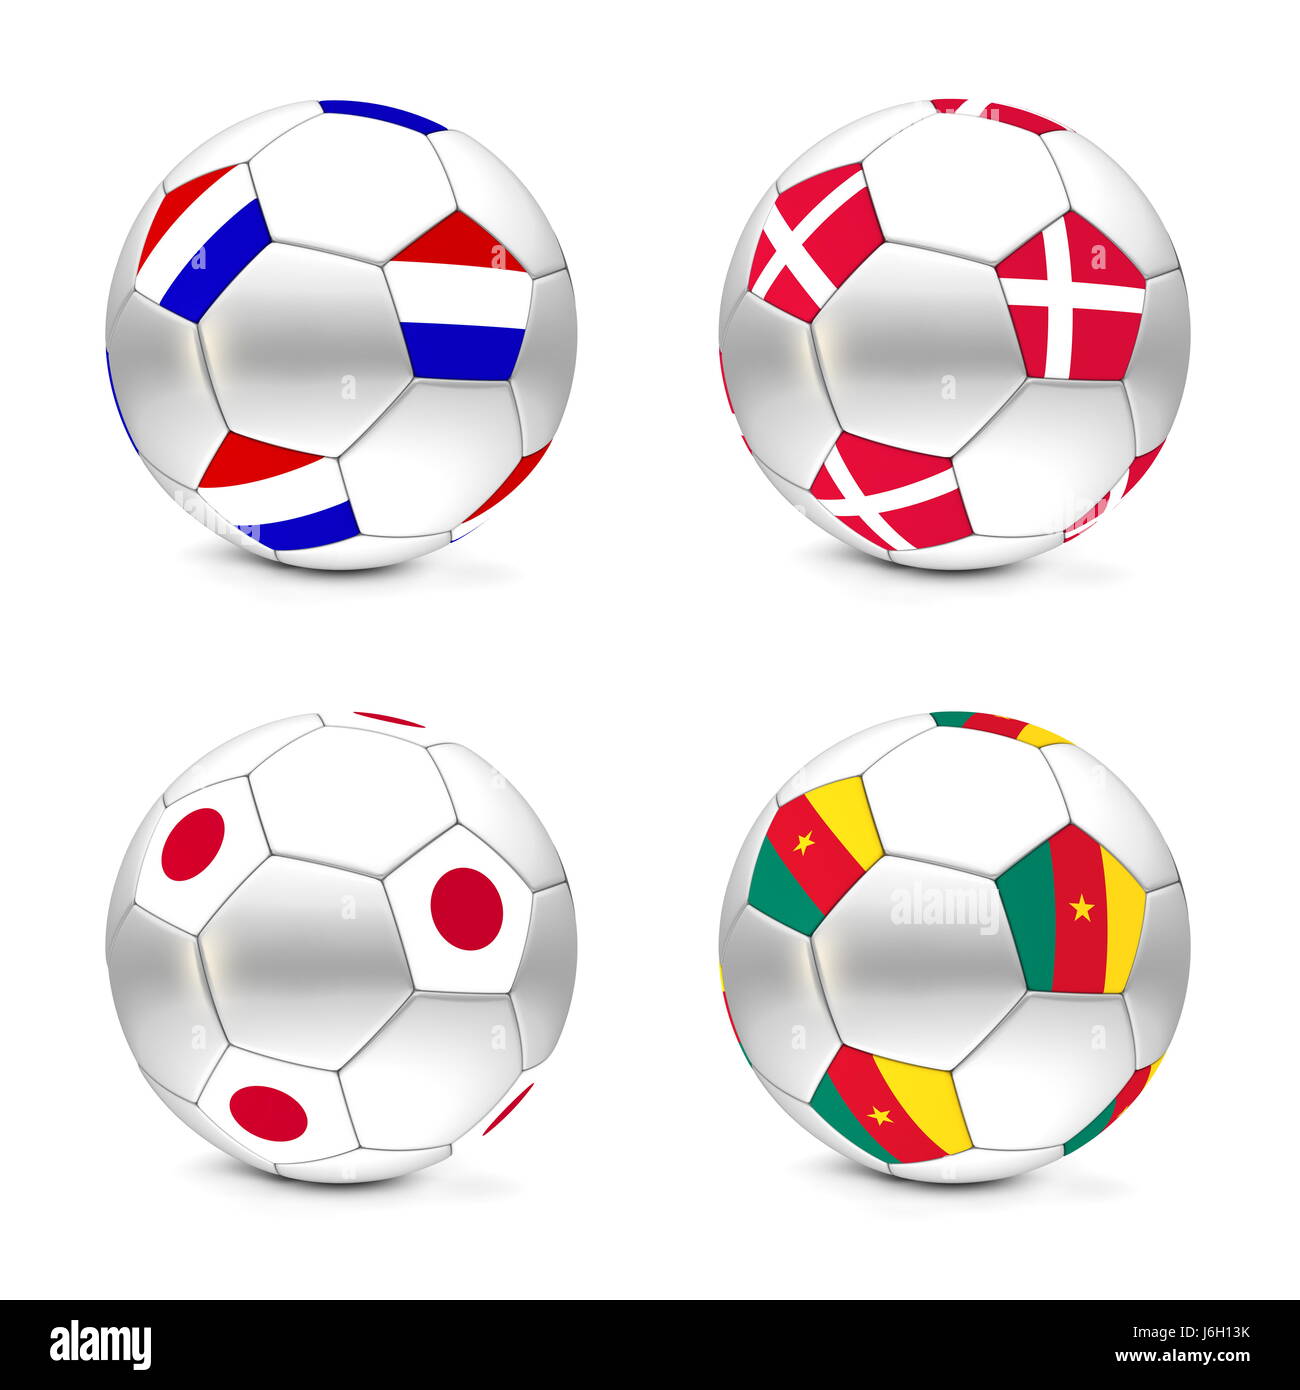 Danimarca Olanda Paesi Bassi giappone sfere Camerun sport sport soccer football Foto Stock